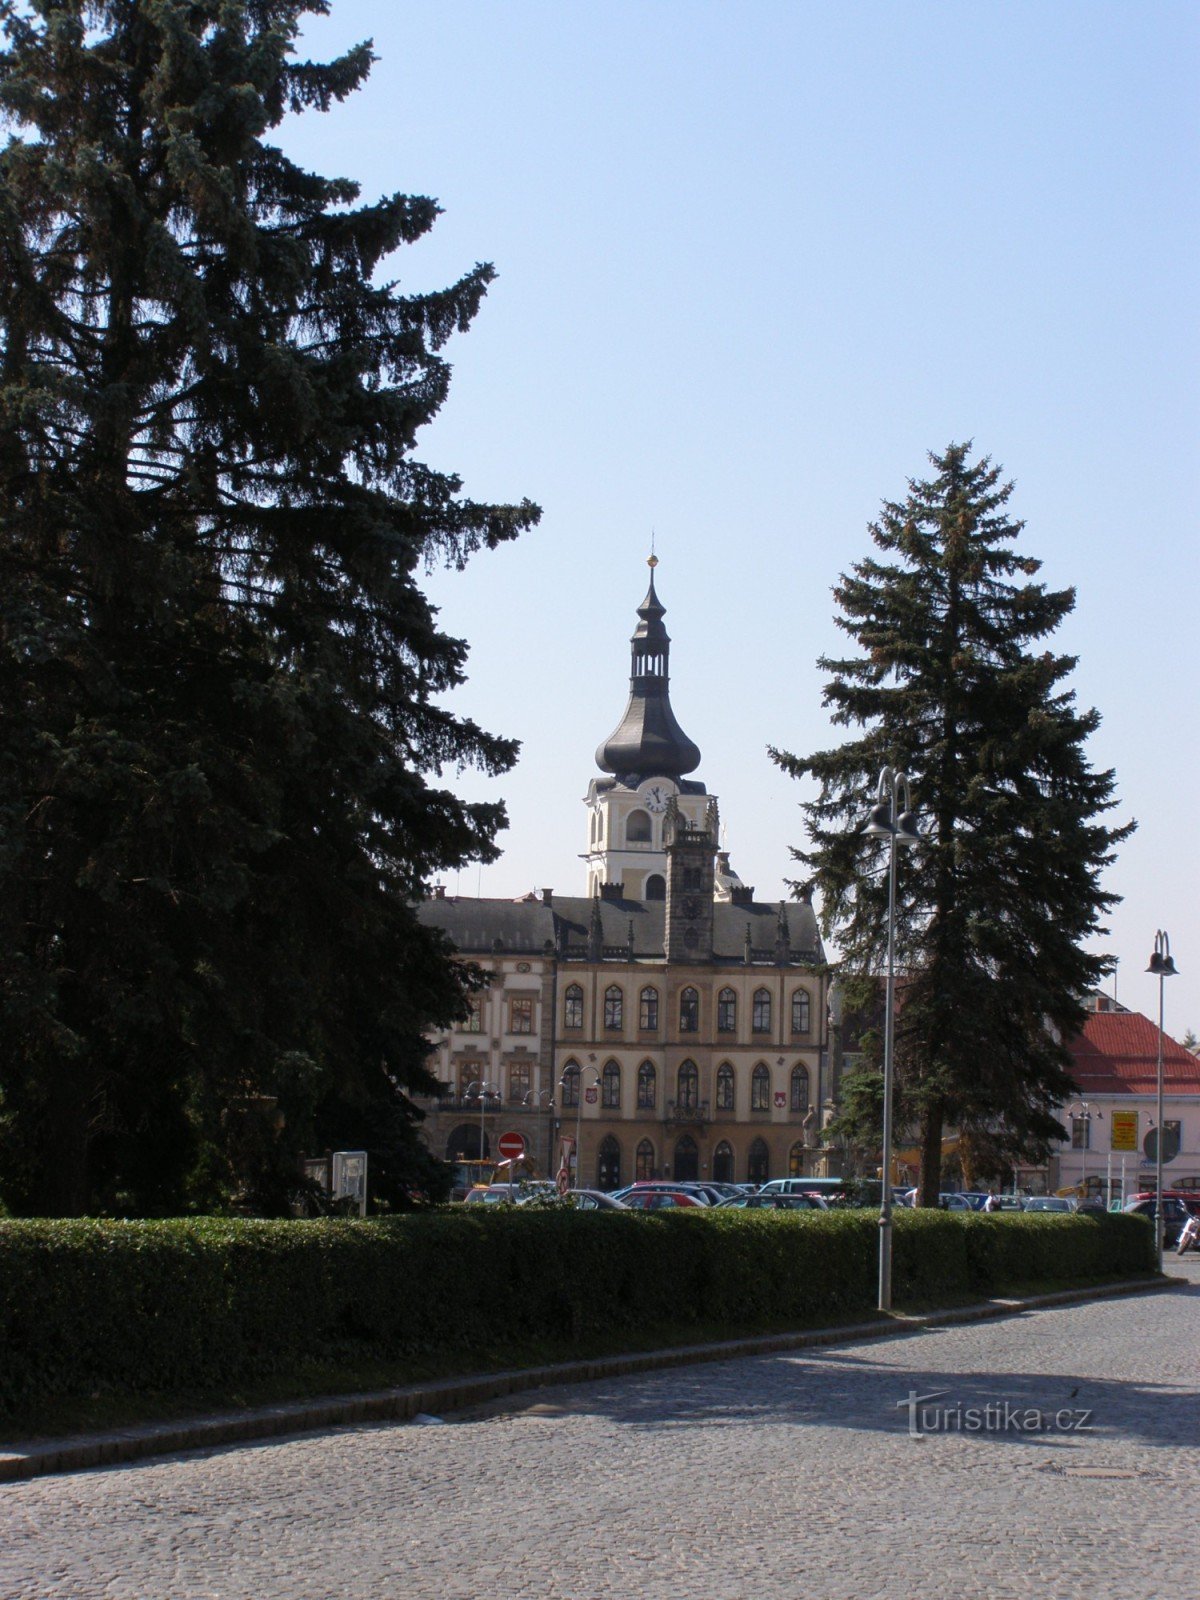 Hořice - ネオゴシック様式の市庁舎